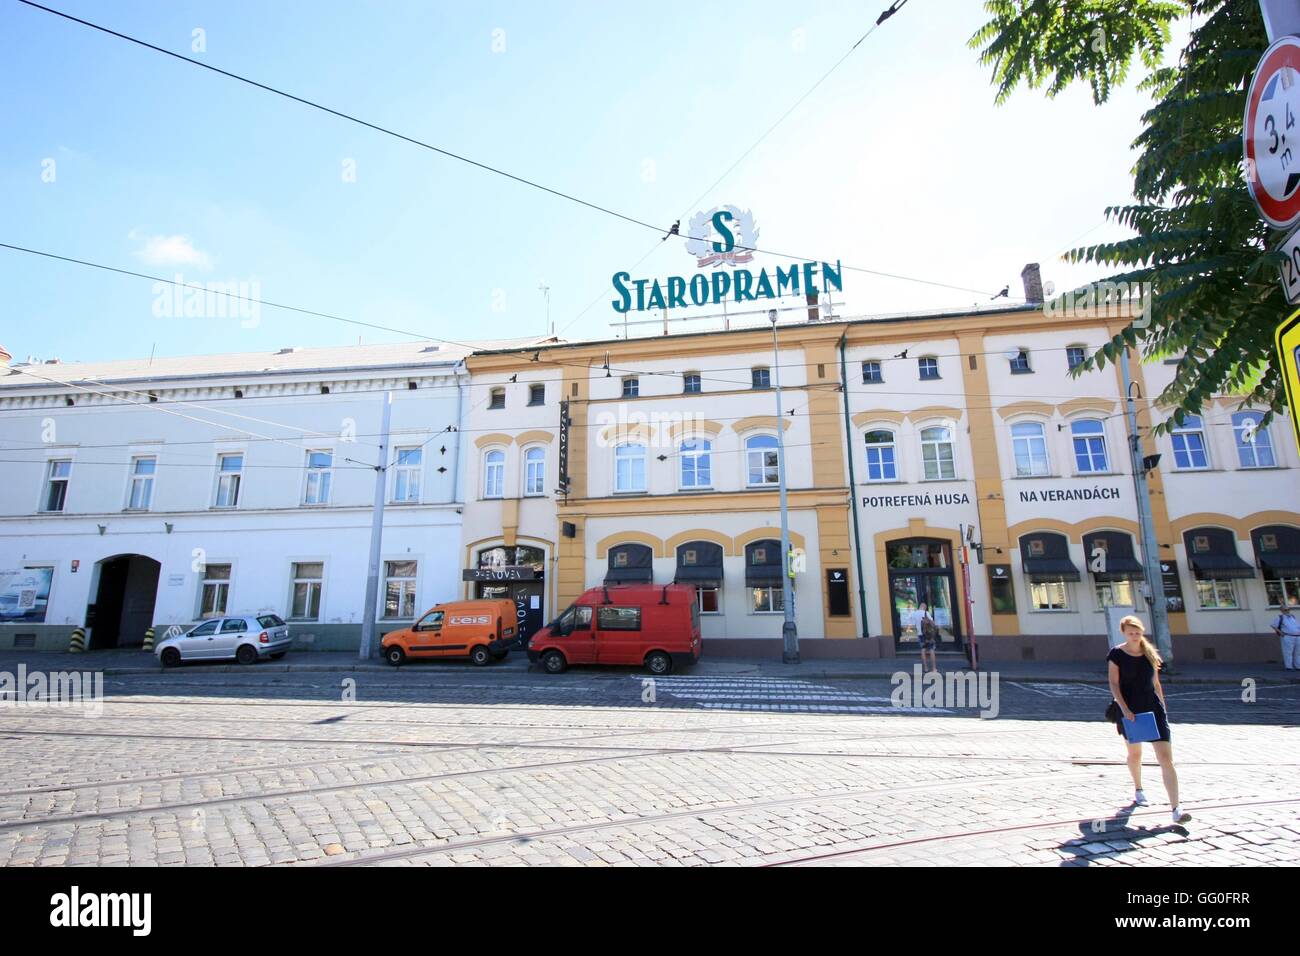 PRAGUE, CZECH REPUBLIC - JULY 19: Street view of Staropramen beer brewery on July 19, 2016 in Prague, Czech Republic Stock Photo